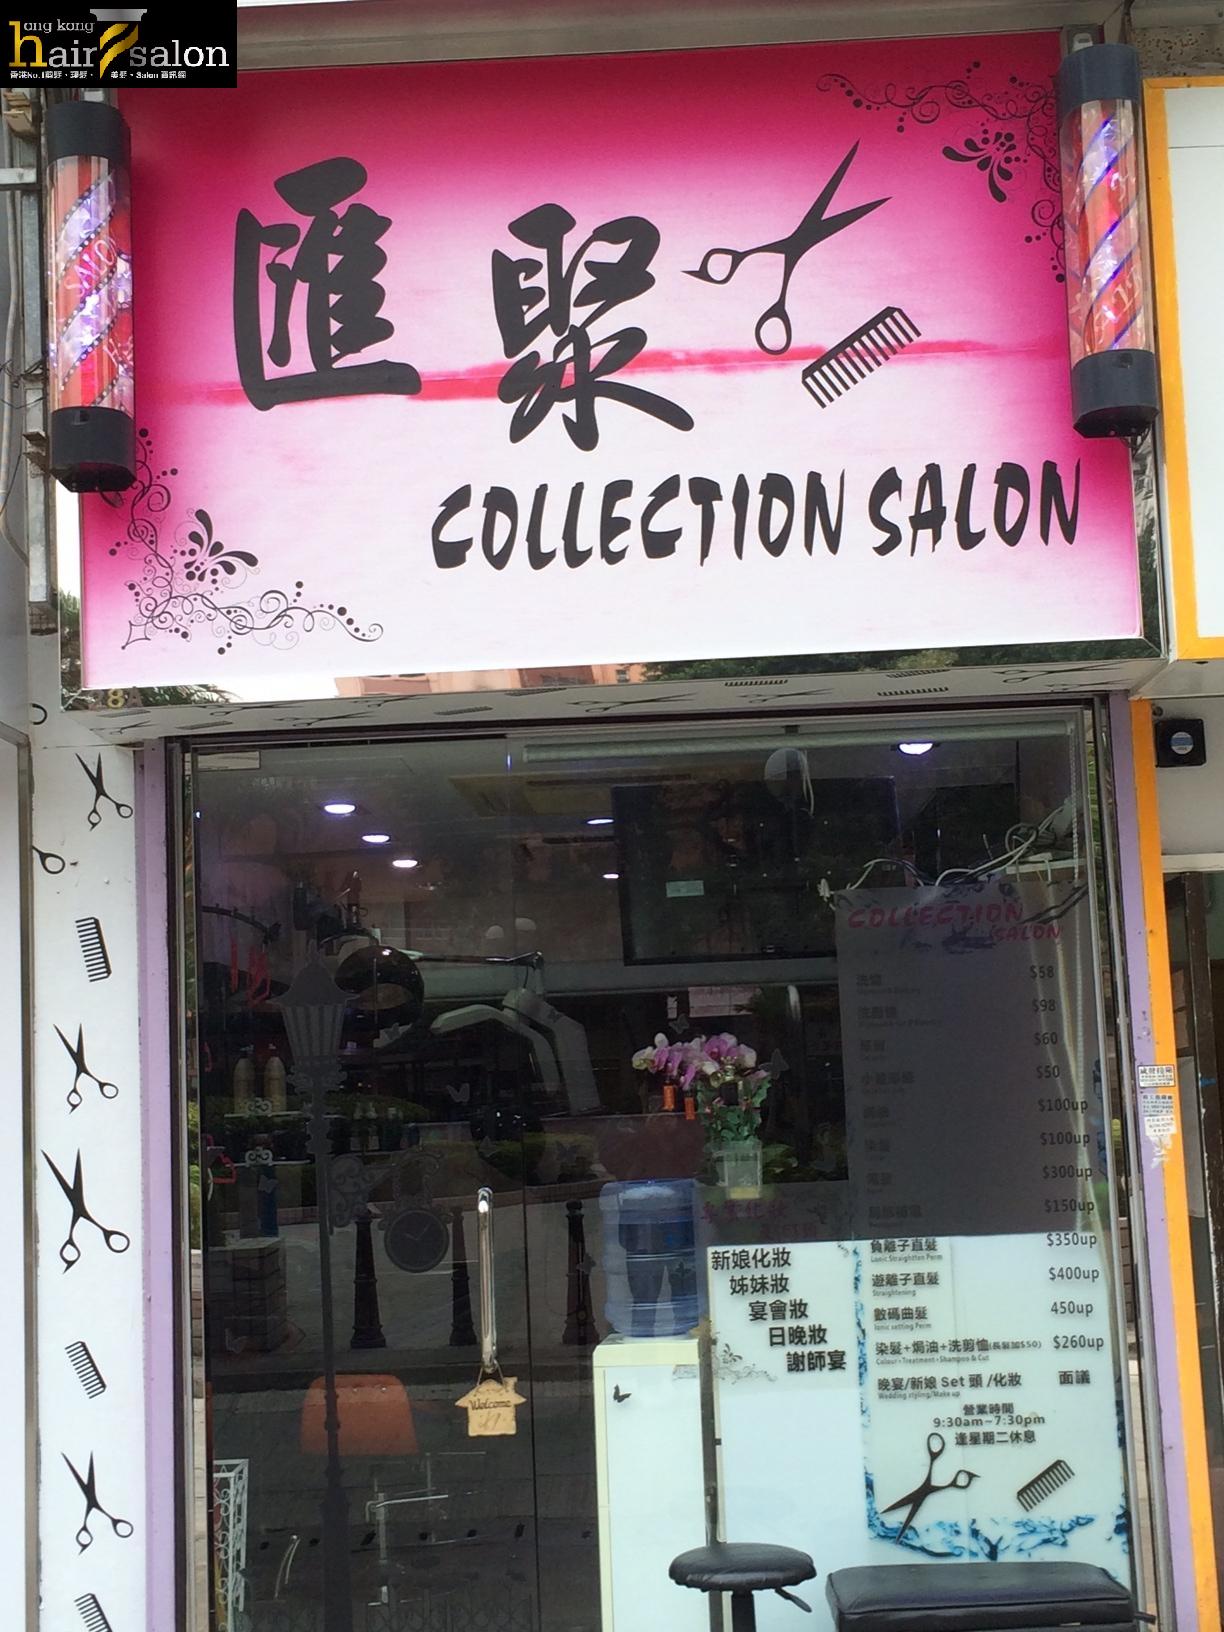 髮型屋: 匯聚 Collection Salon